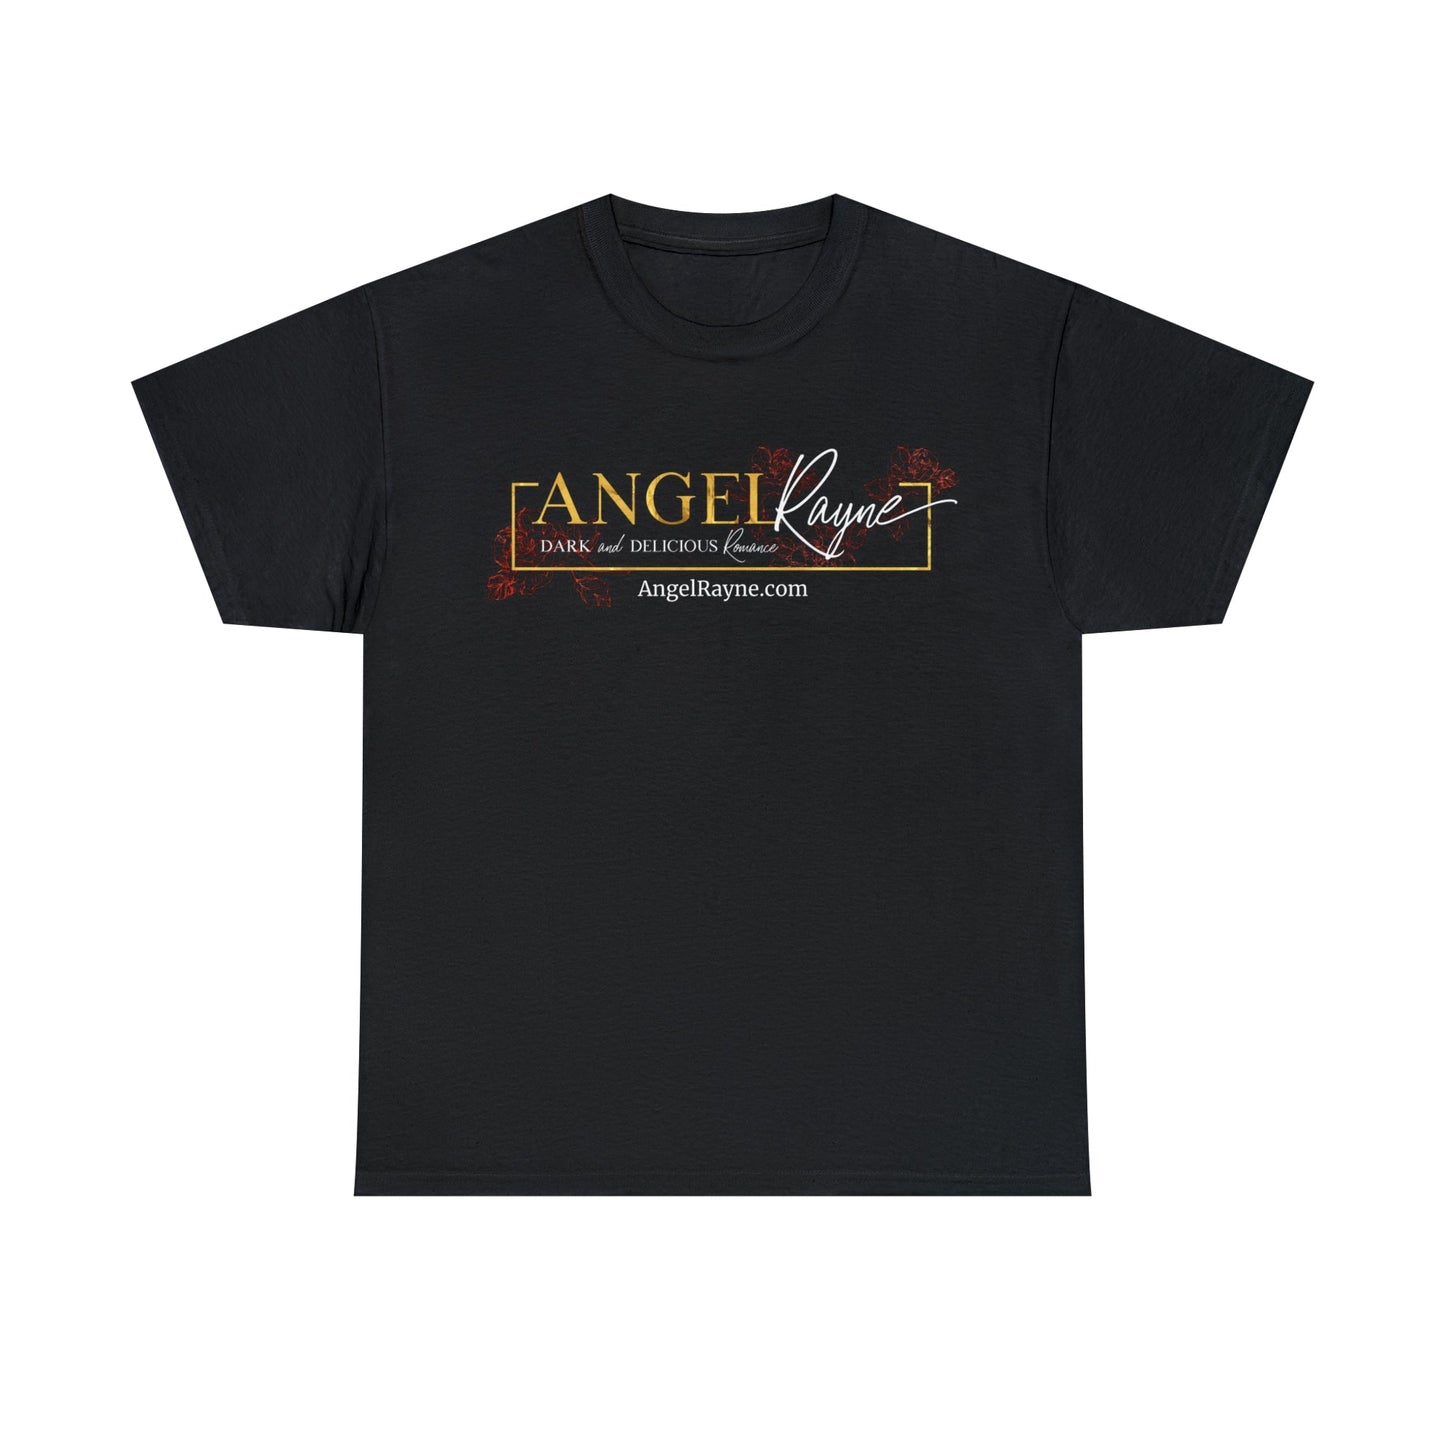 Angel Rayne Logo T-Shirt - Dark Mafia Romance for Adults